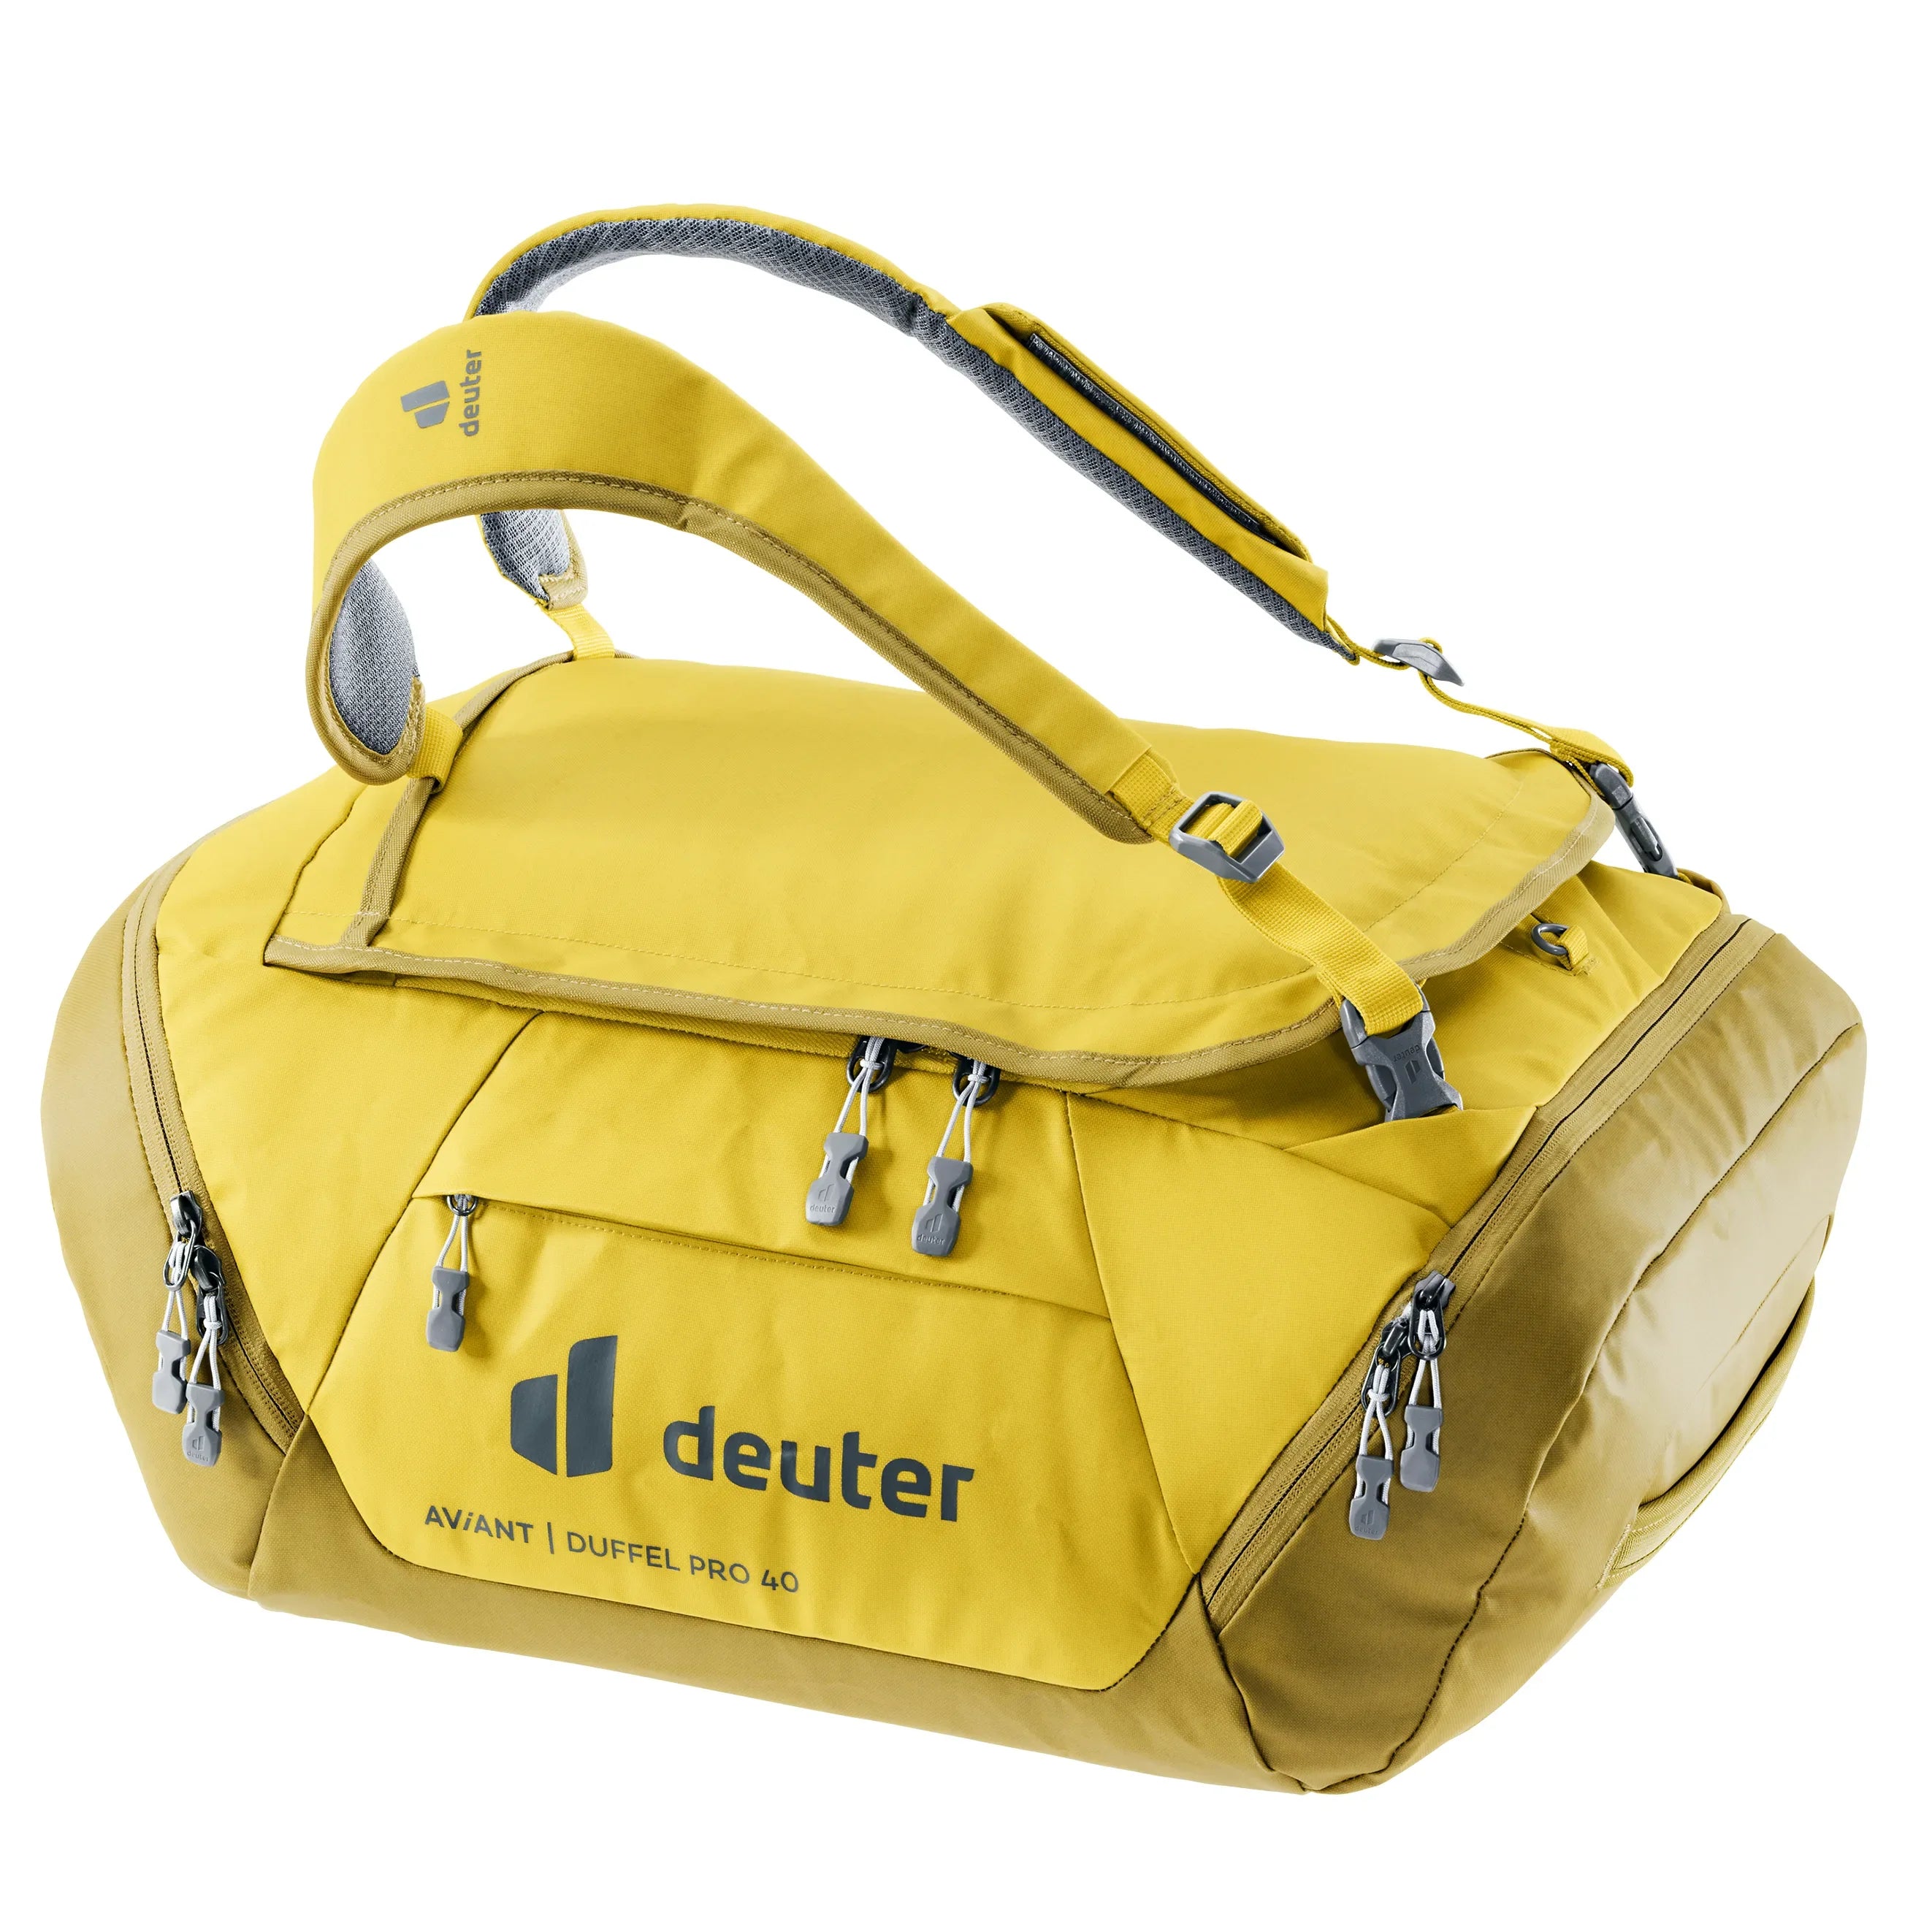 Deuter Travel Aviant Duffle Pro 40 sac de voyage 52 cm - maïs-curcuma